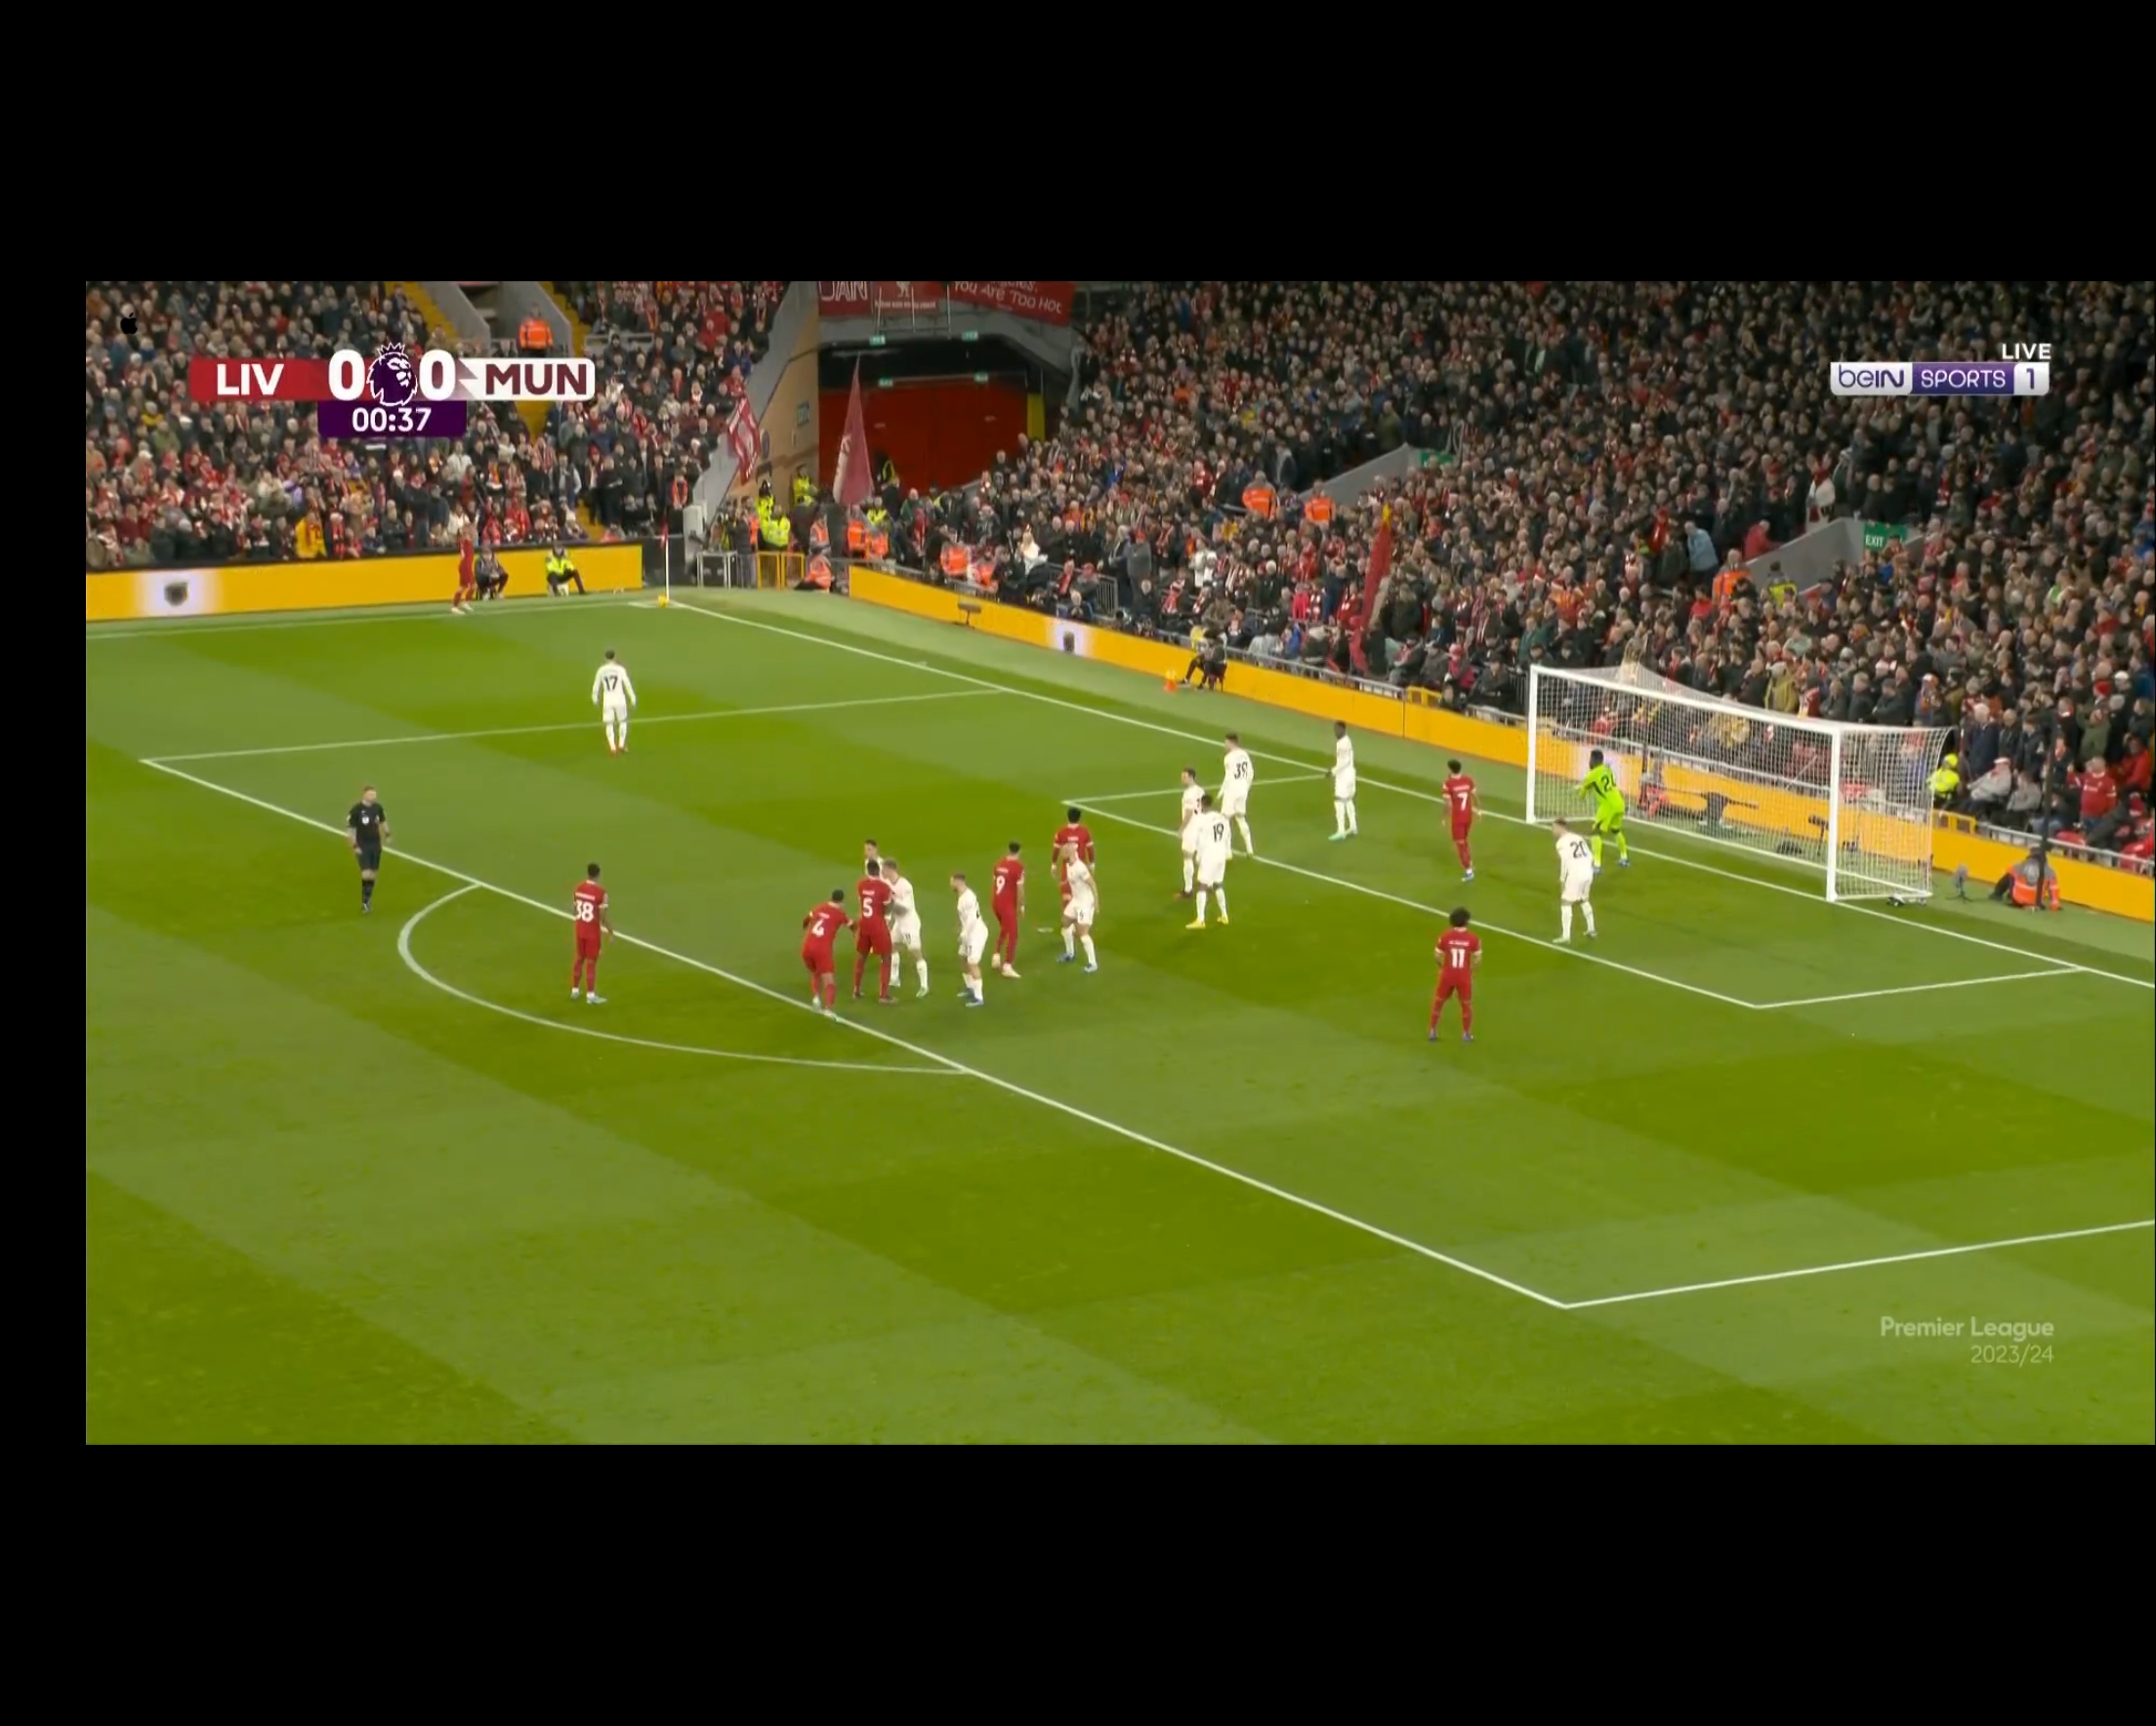 Liverpool vs Manchester United live stream